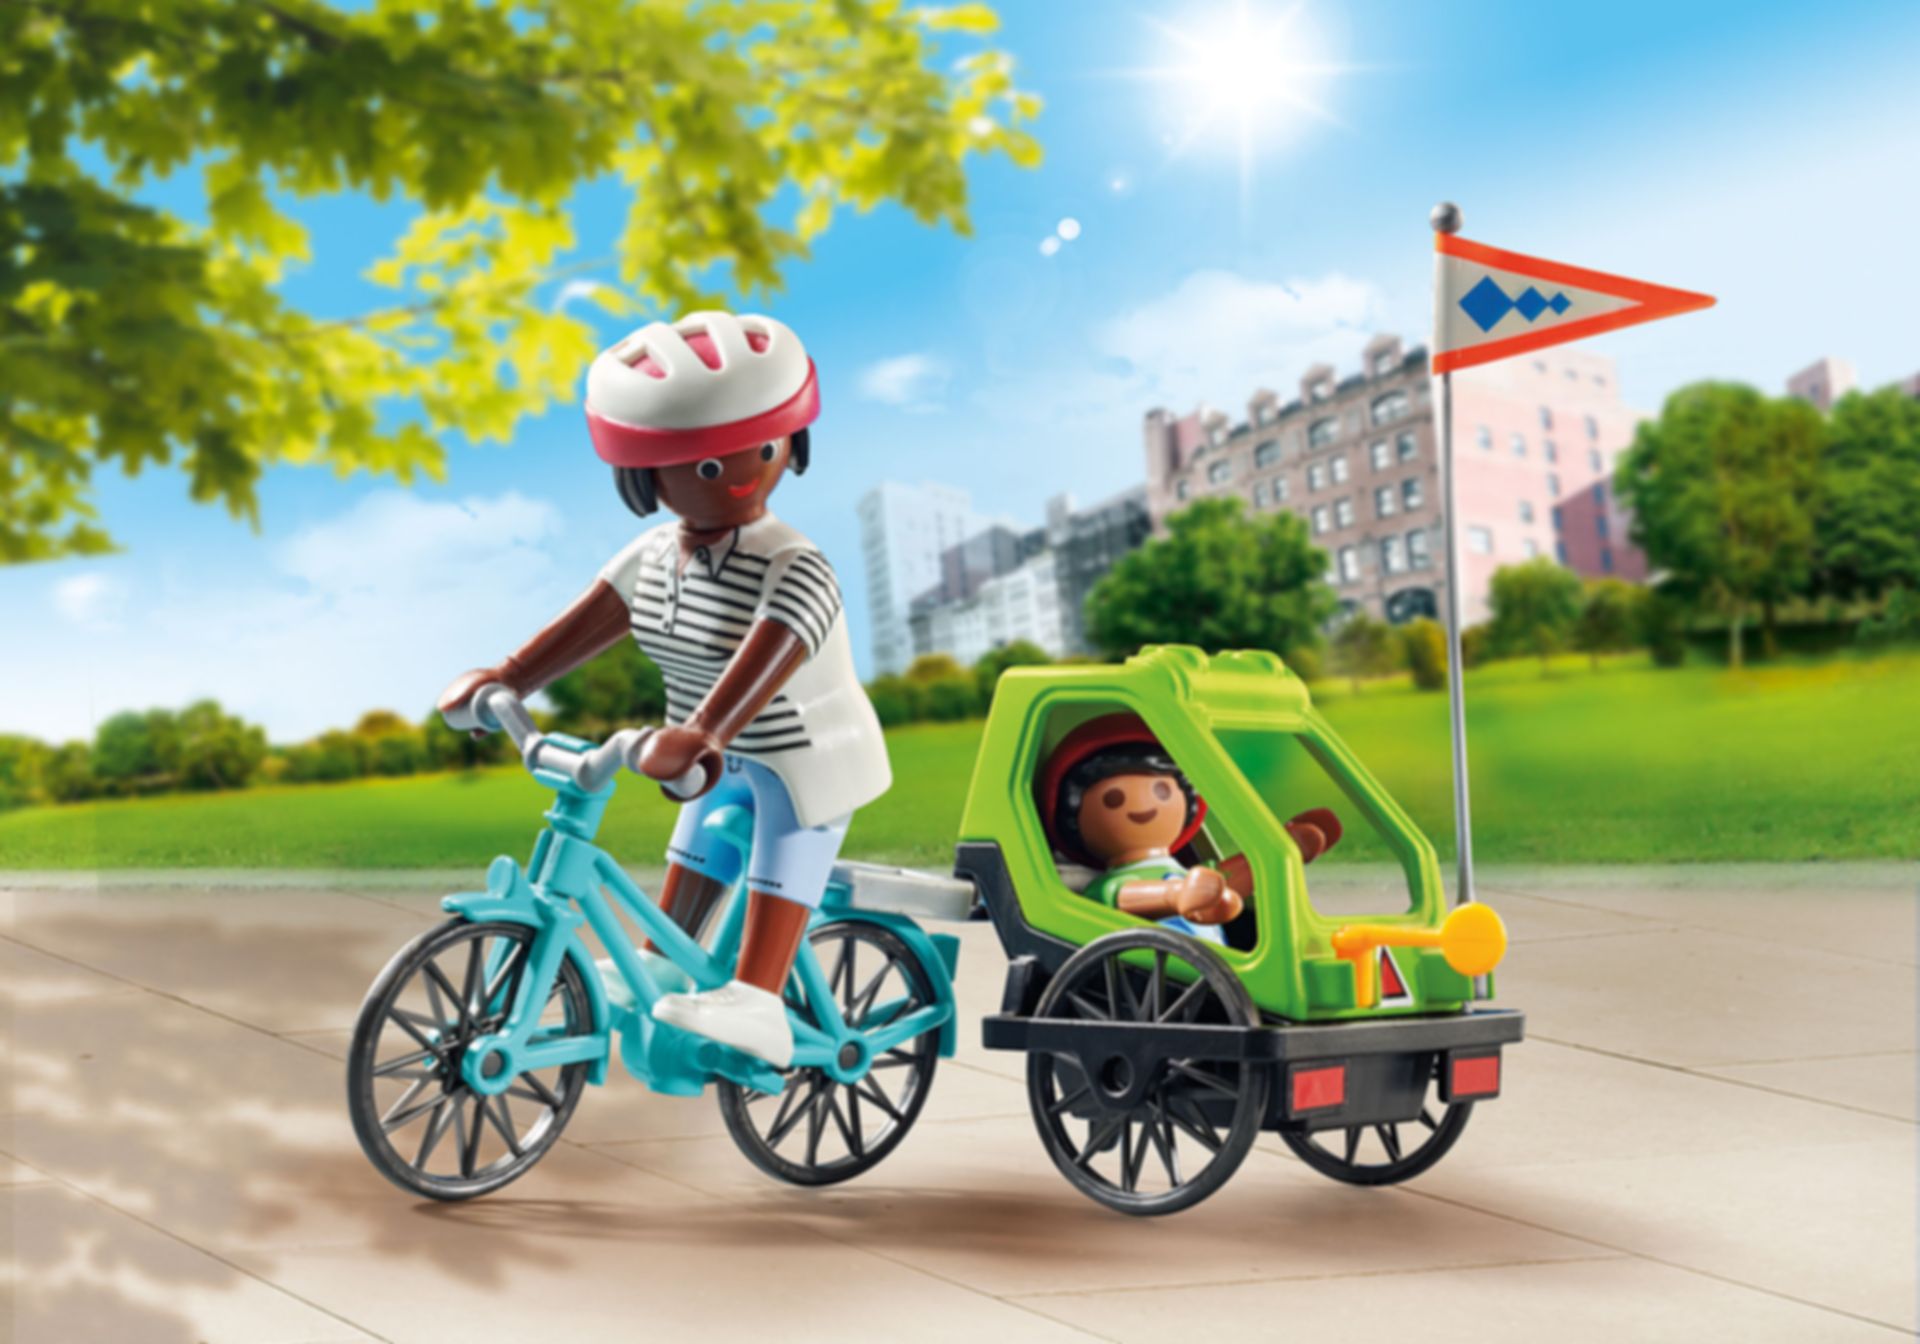 Cyclistes maman et enfant gameplay